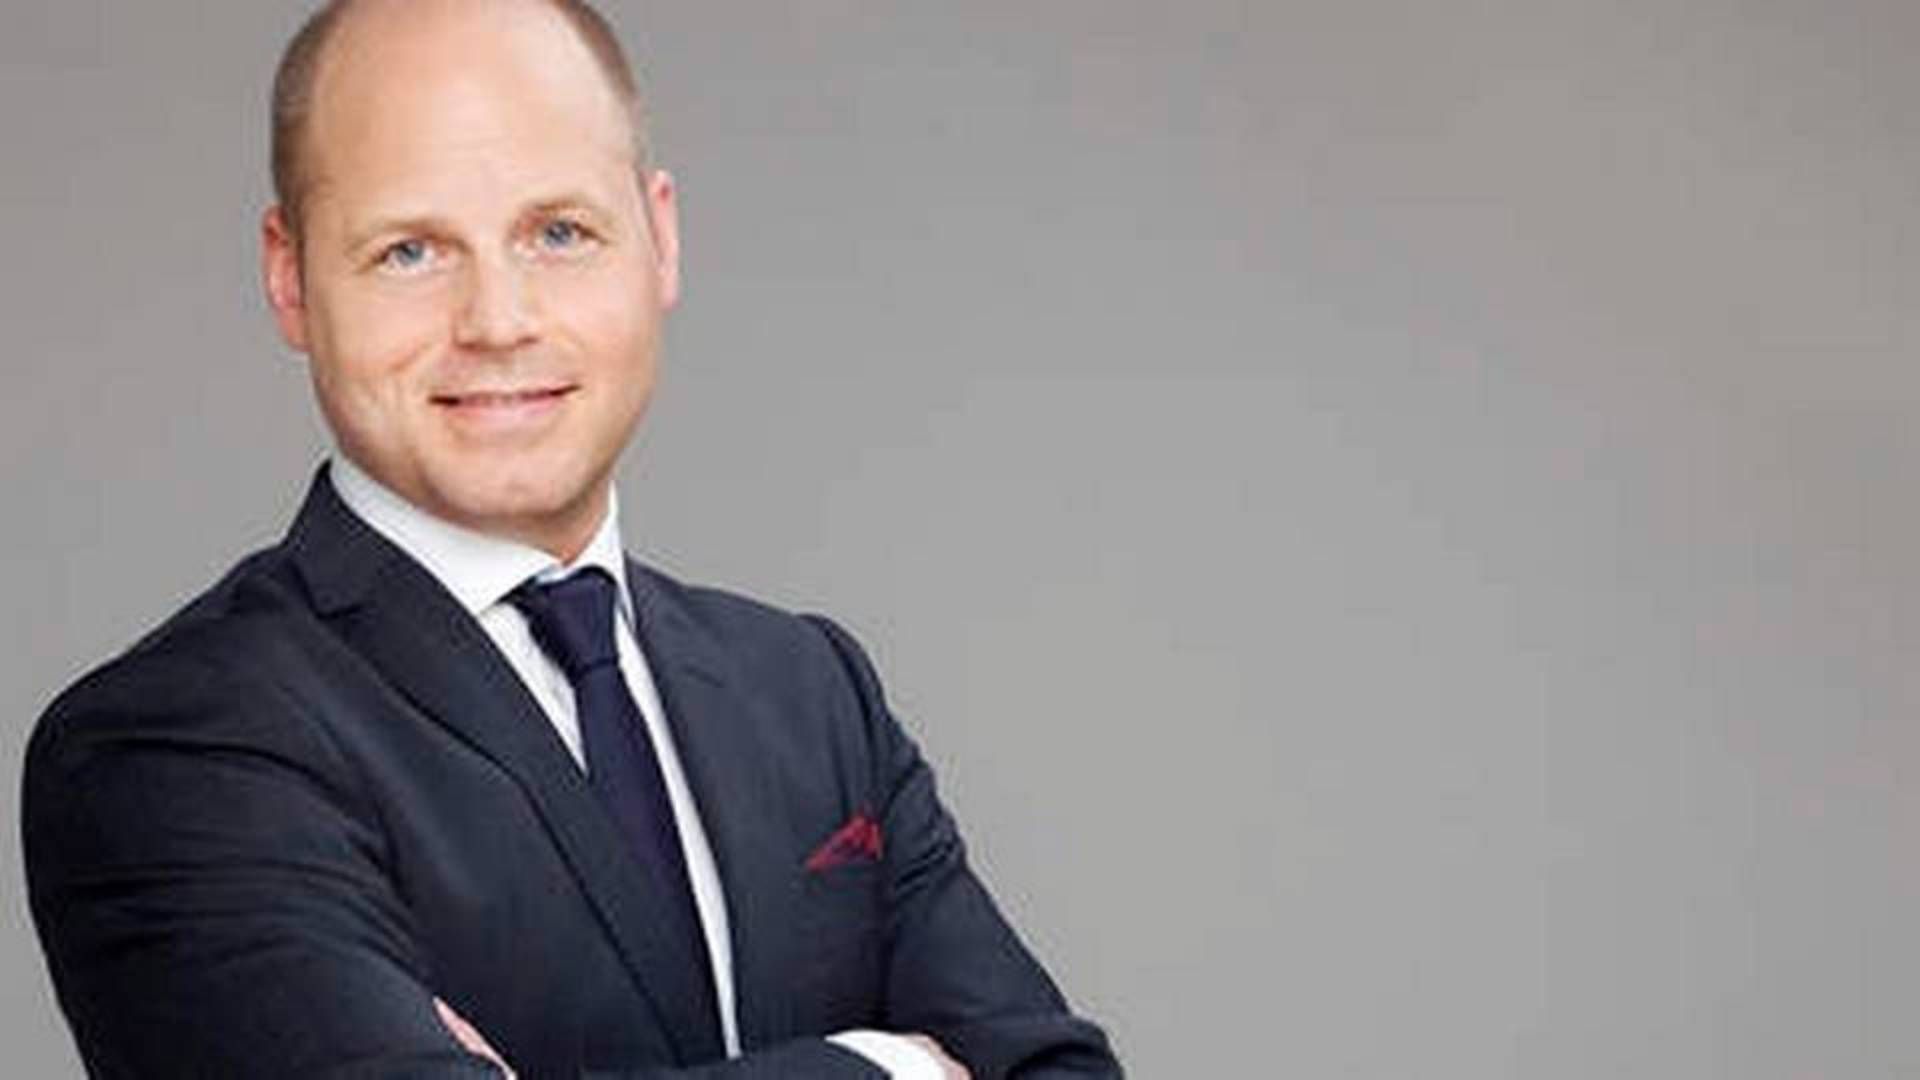 Nicolay Eger, new head of Nordea Funds Norway. | Photo: PR / NORDEA